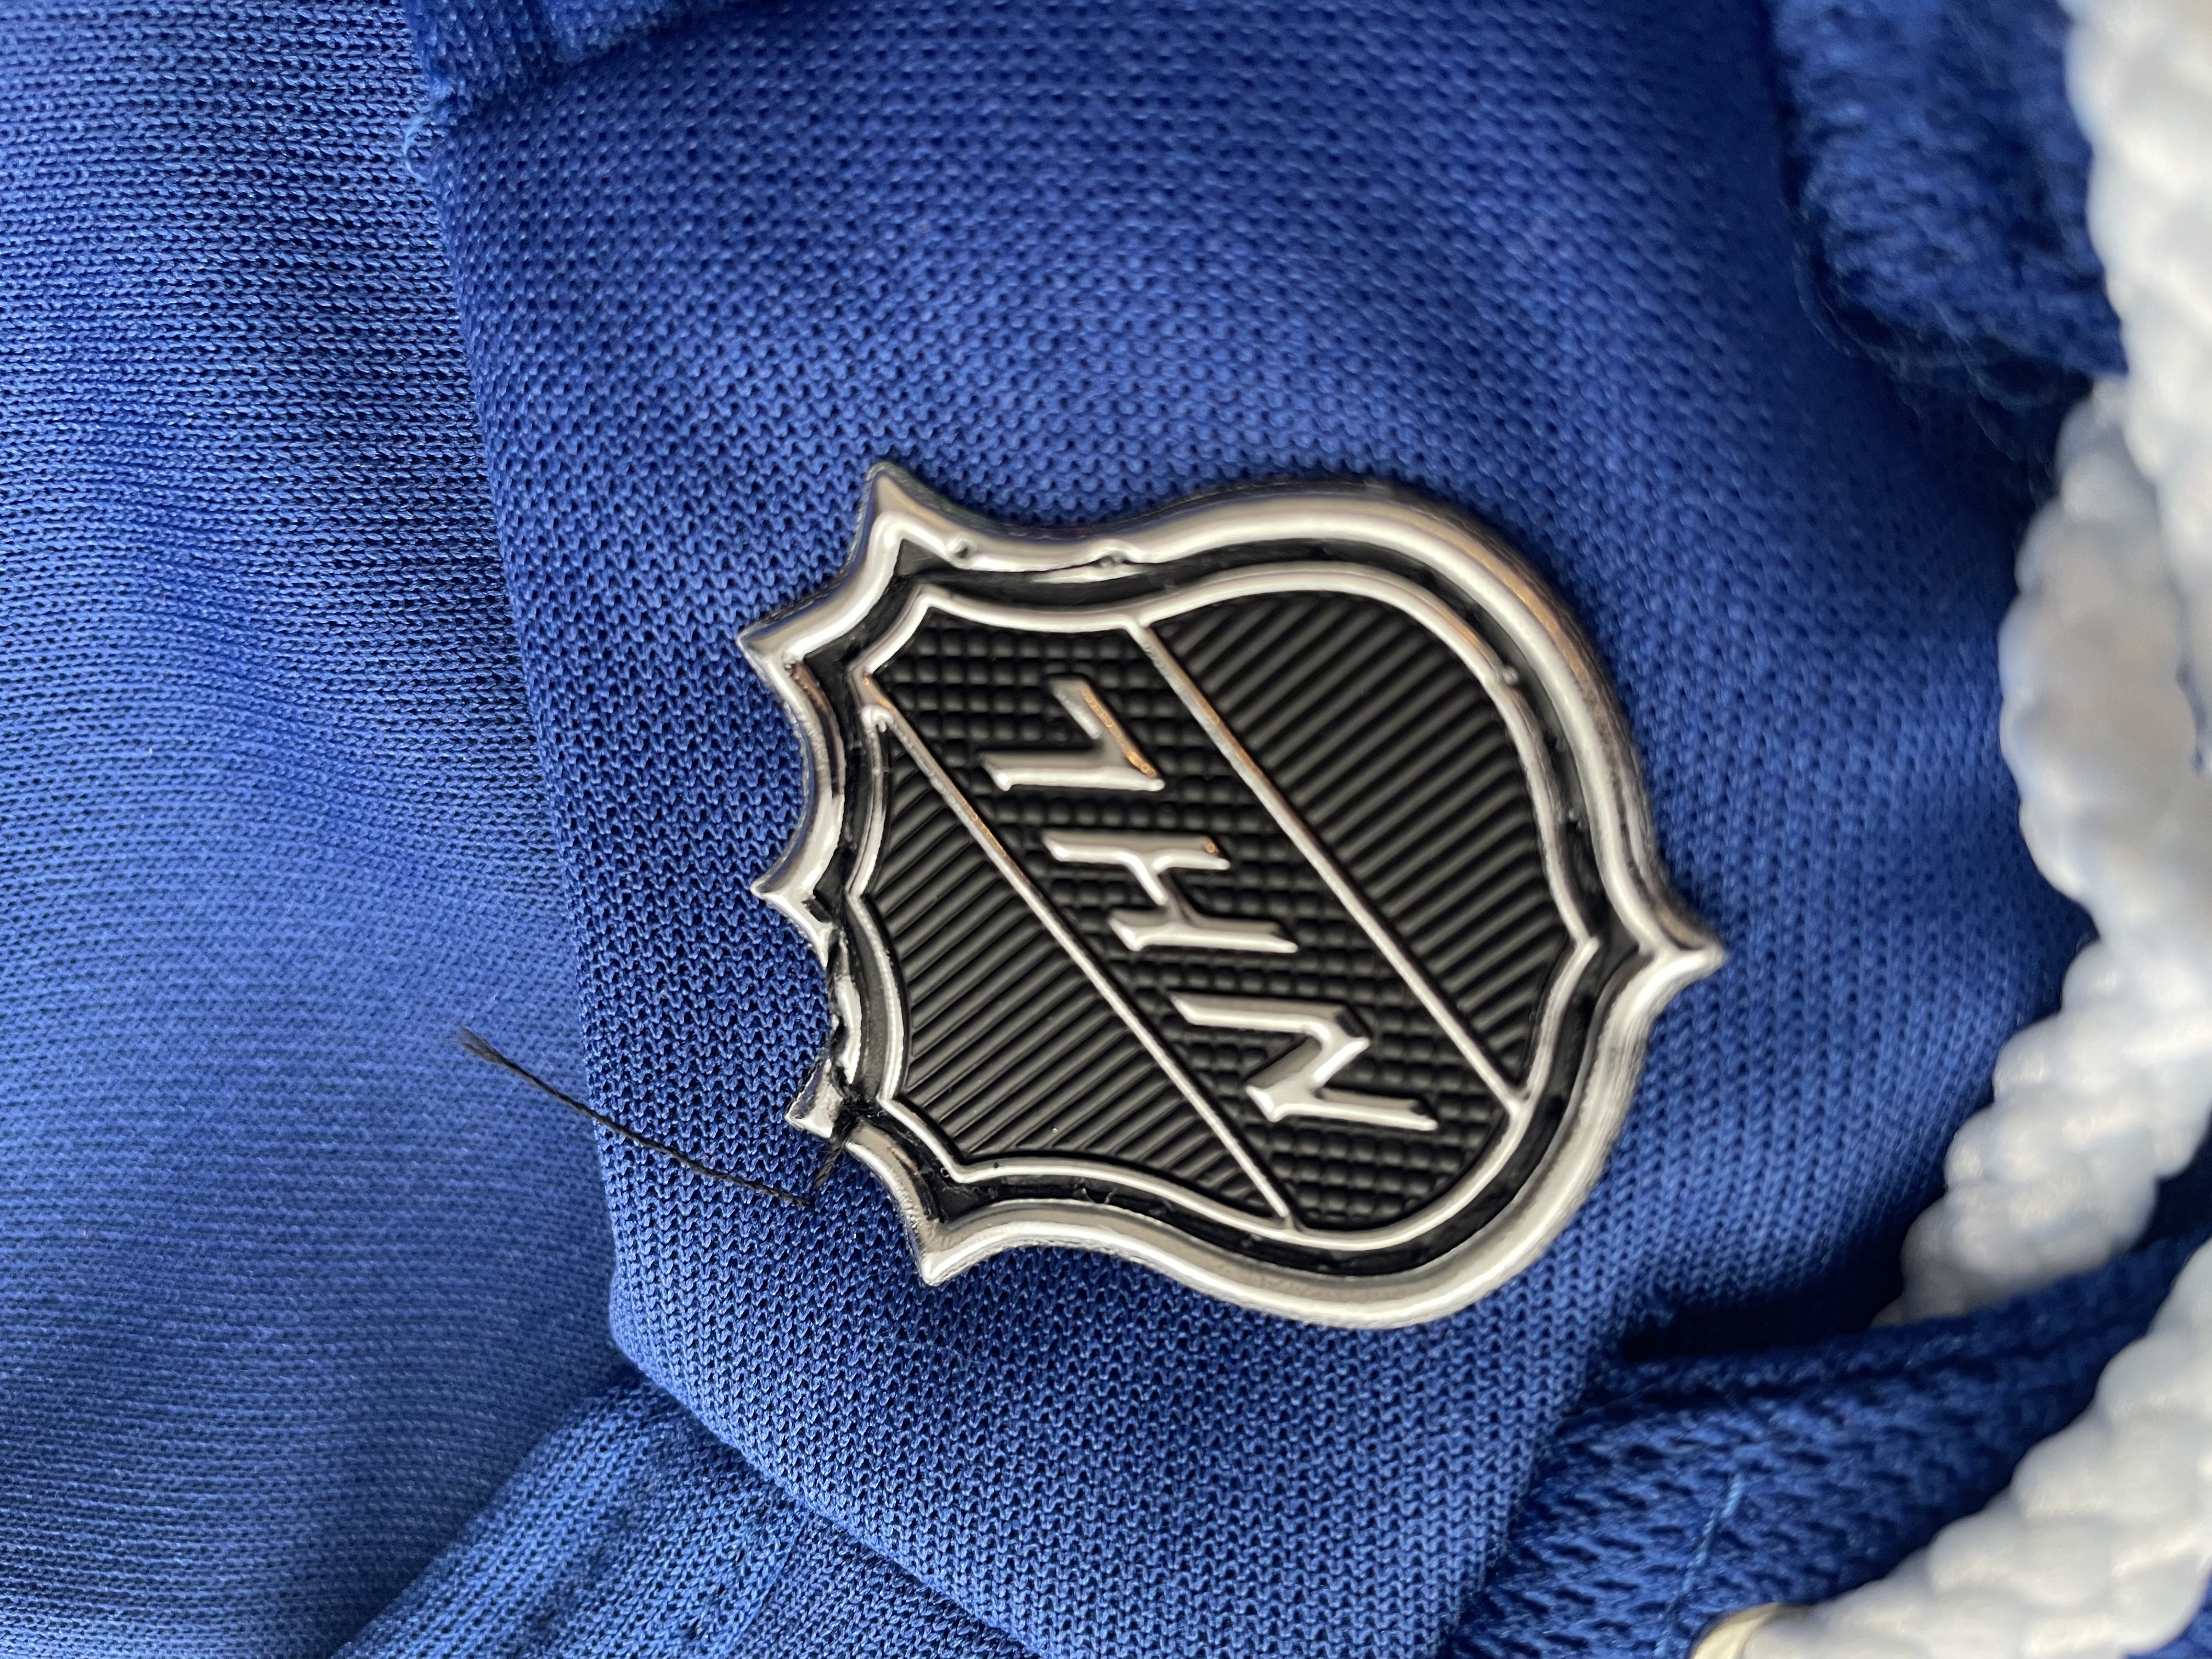 Toronto Maple Leafs Jerseys & Apparel Reviews - 2 Reviews of